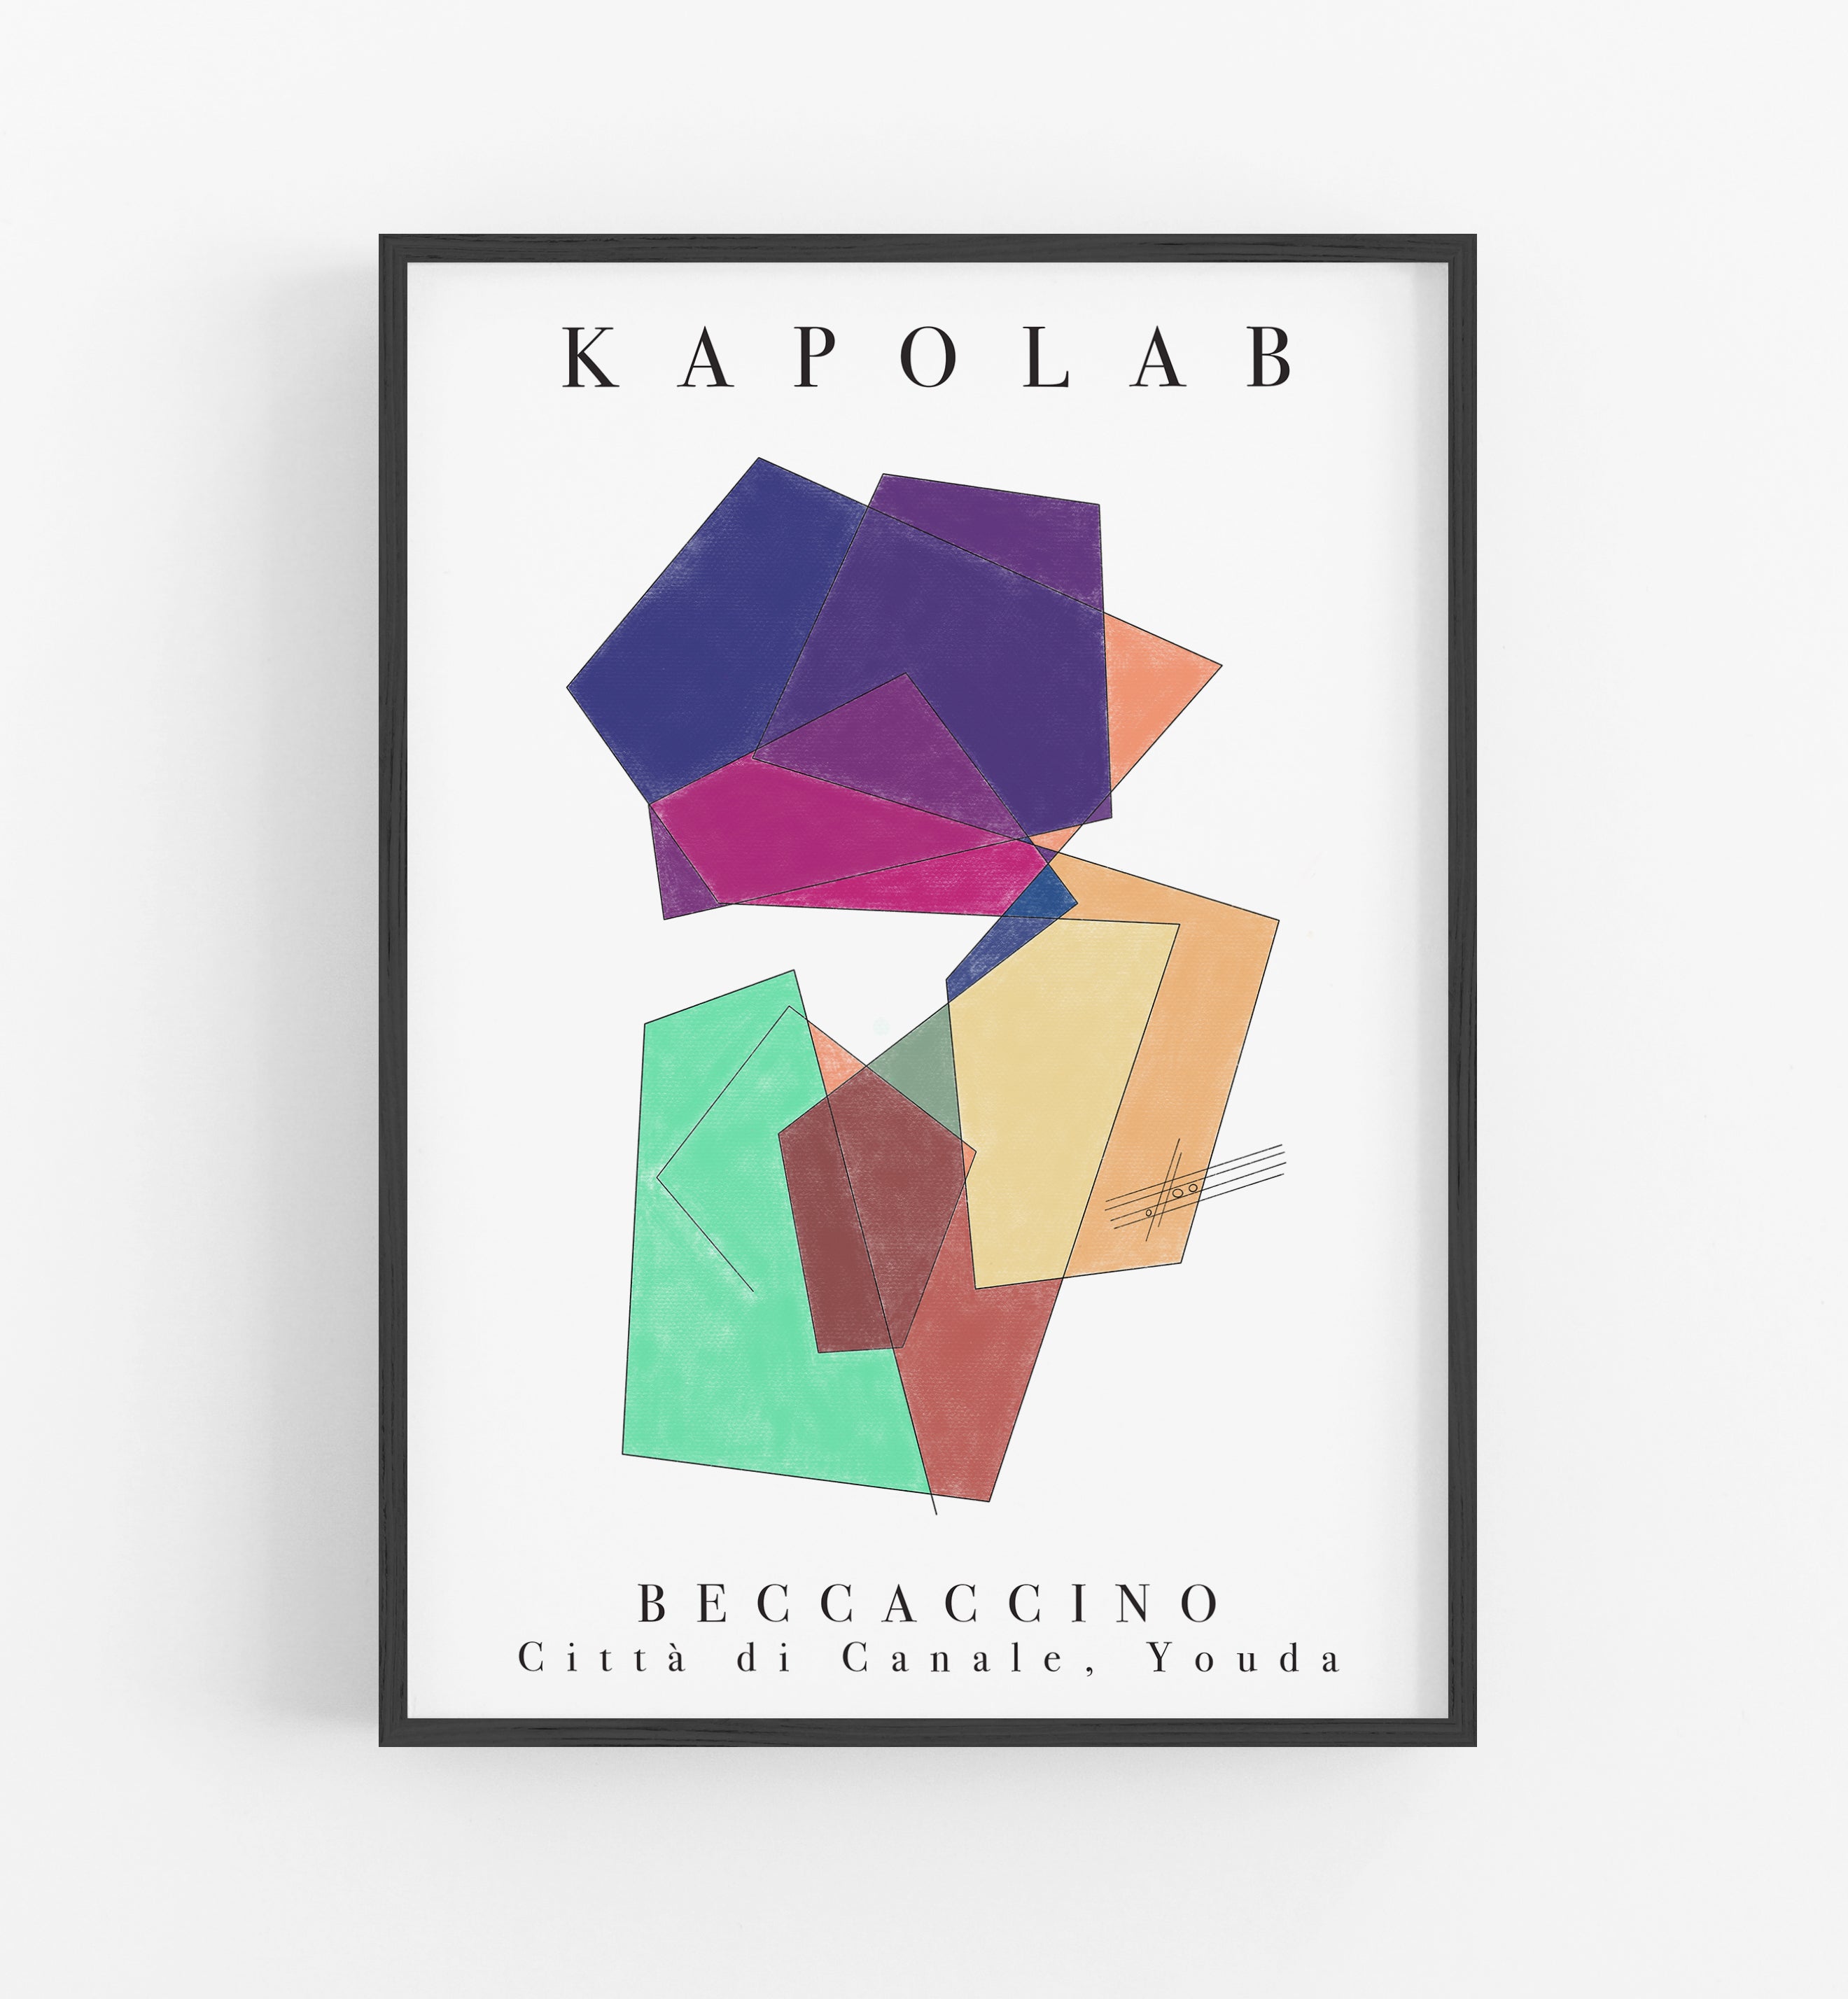 Beccaccino 2019 KapoLab